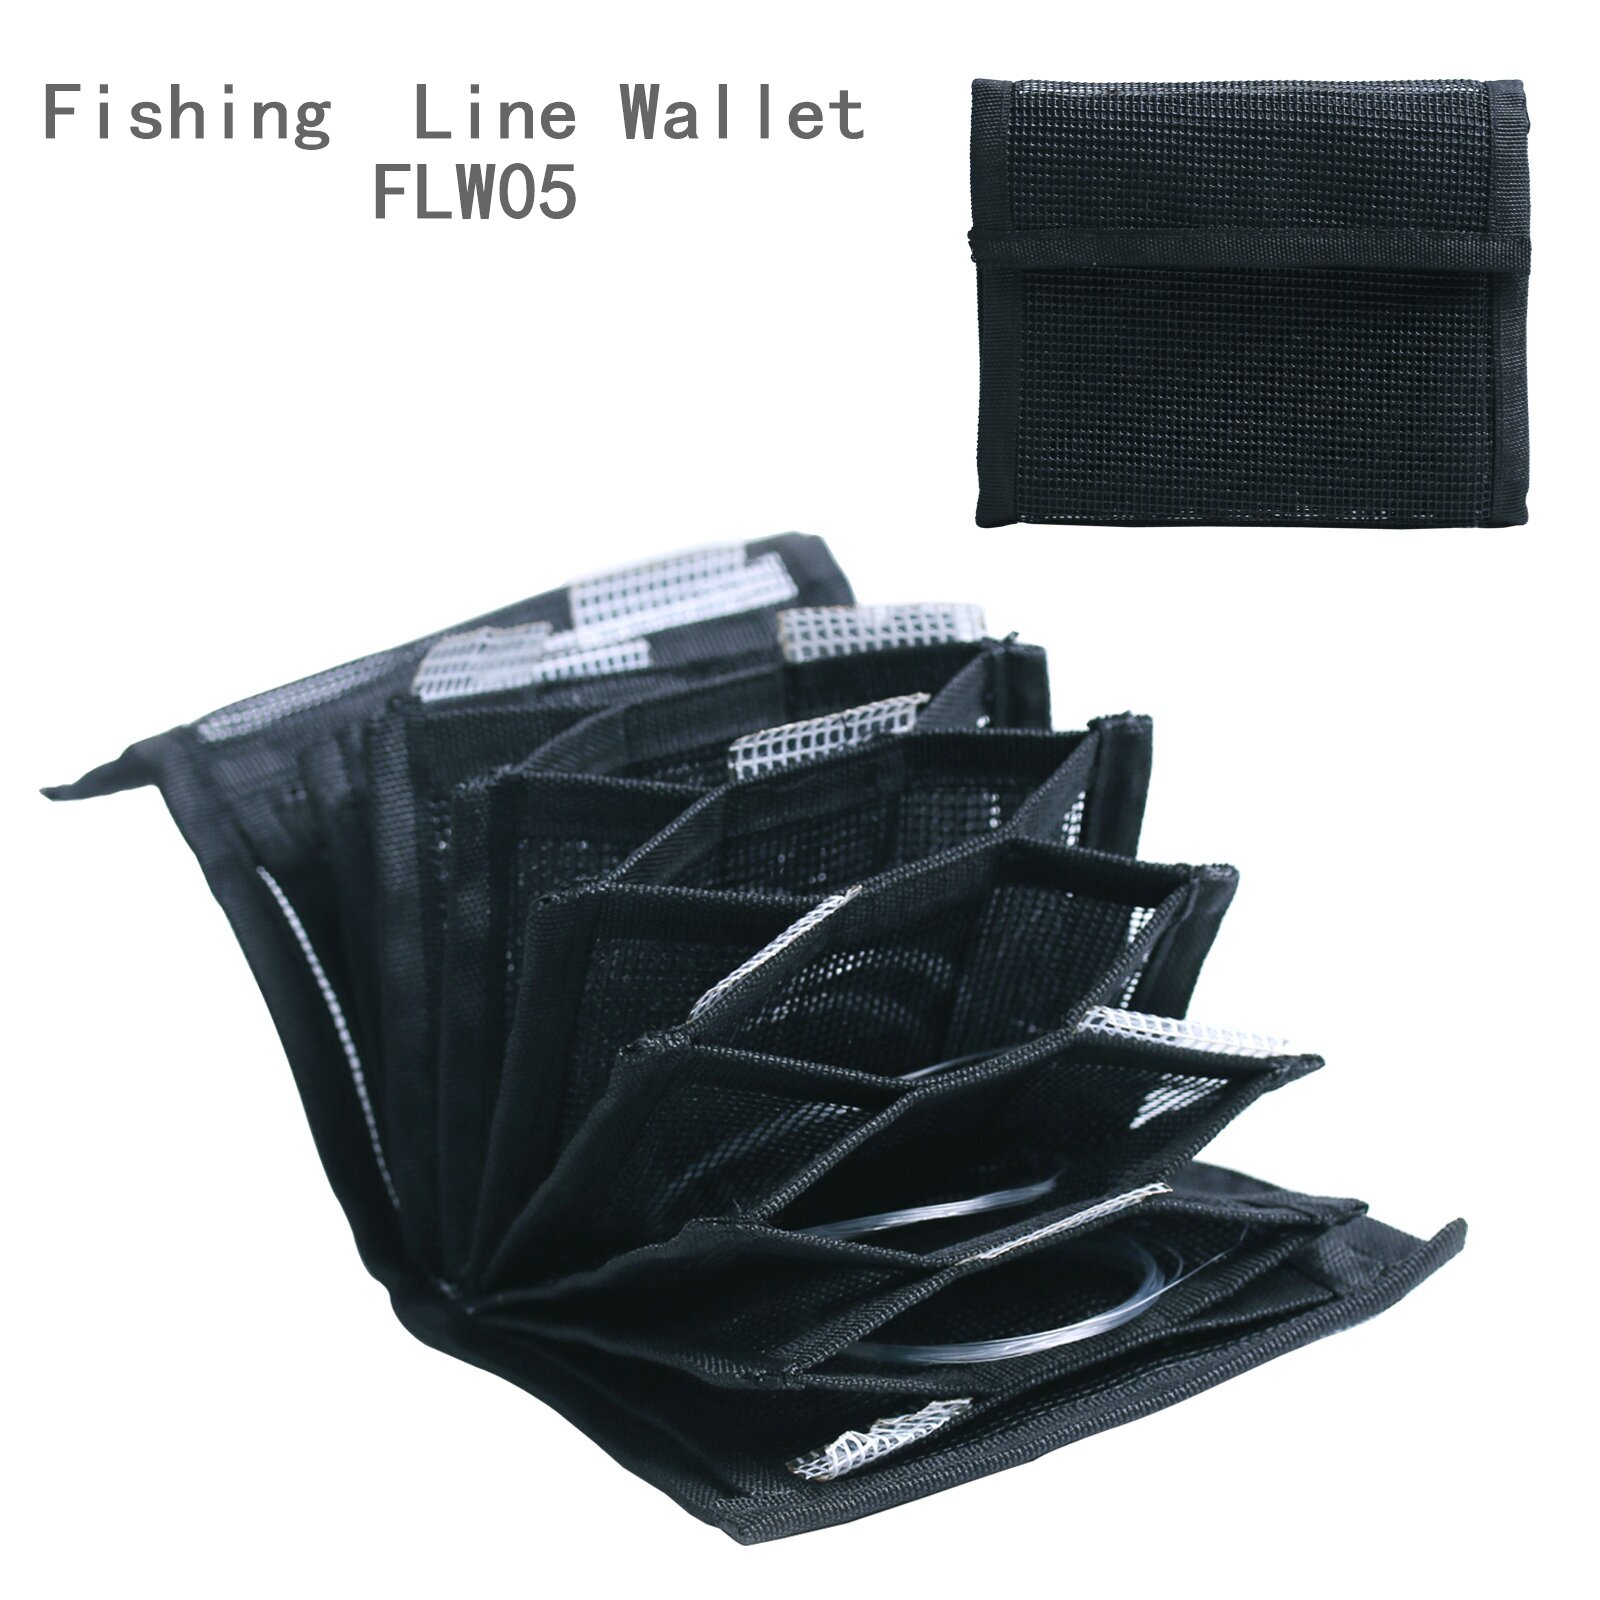 fishing line wallet flw05